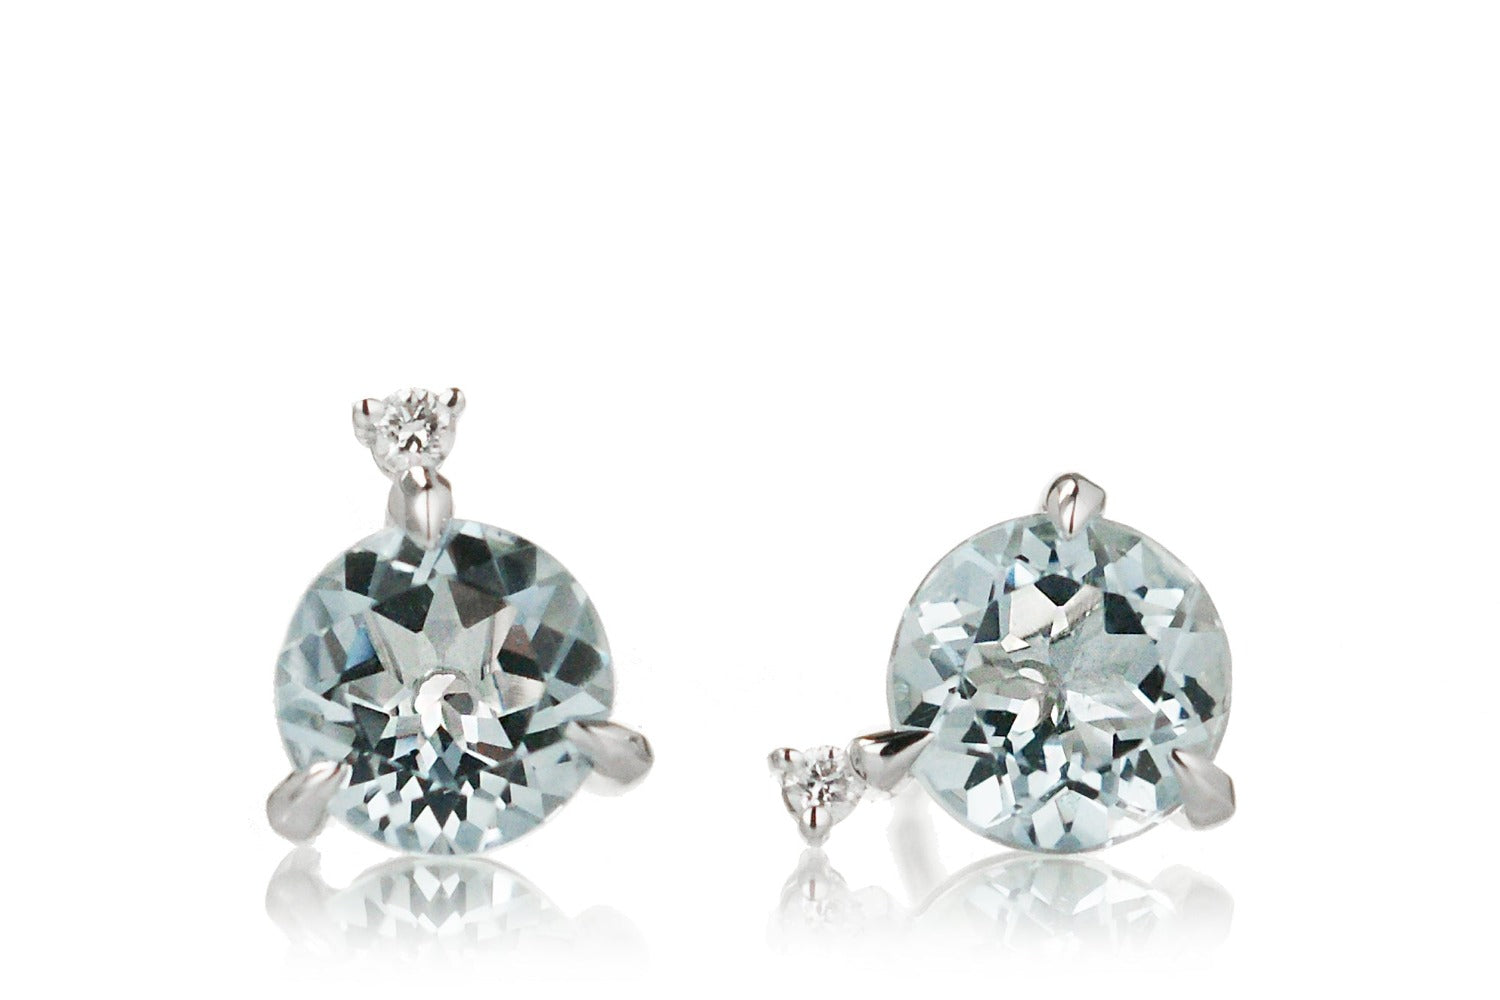 Round aquamarine stud earrings with diamond accent